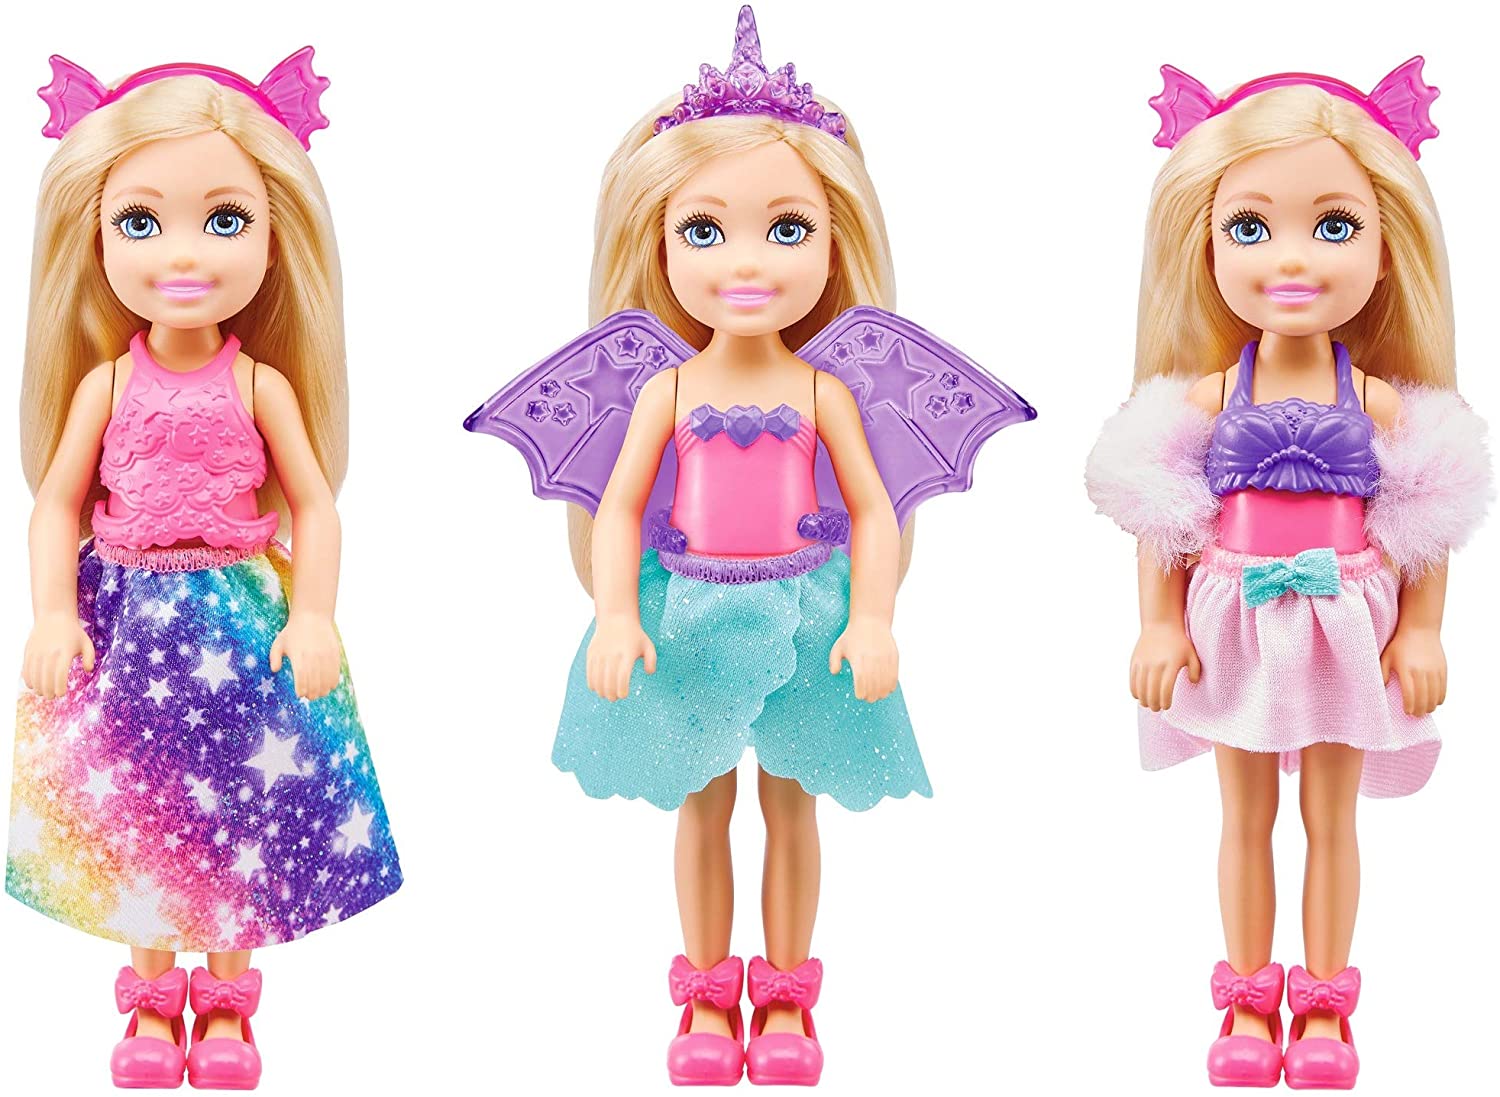 New Barbie Dreamtopia dolls 2021 - YouLoveIt.com